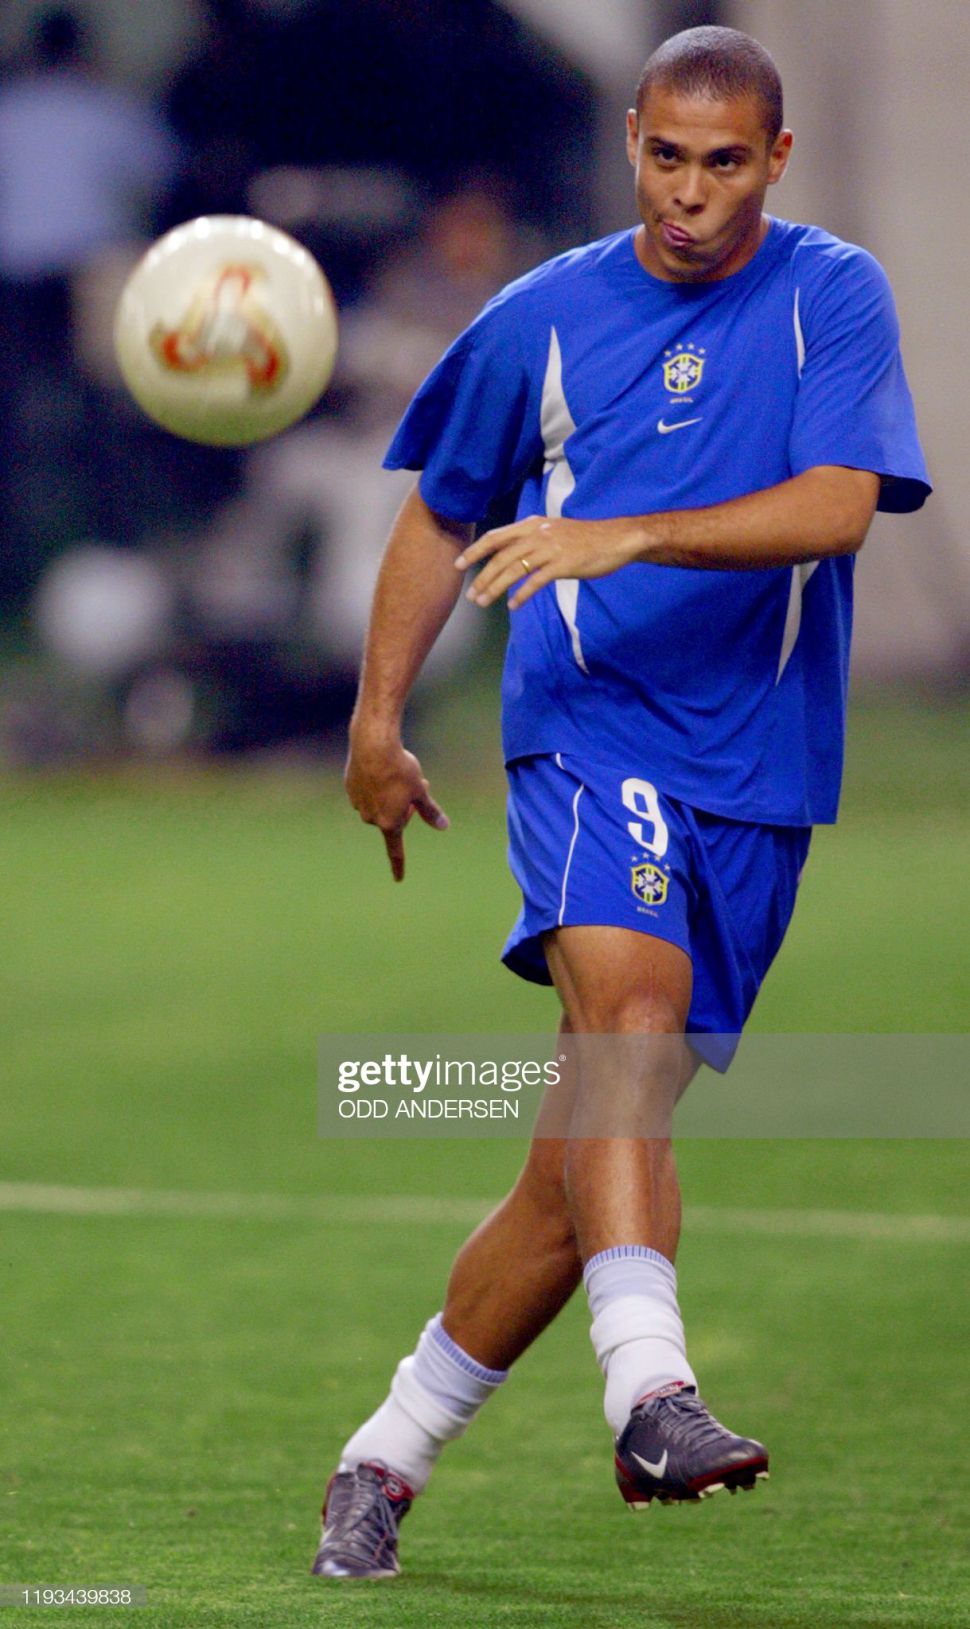 Áo training Brazil 2002-2003-2004 away shirt jersey blue 182268 Nike